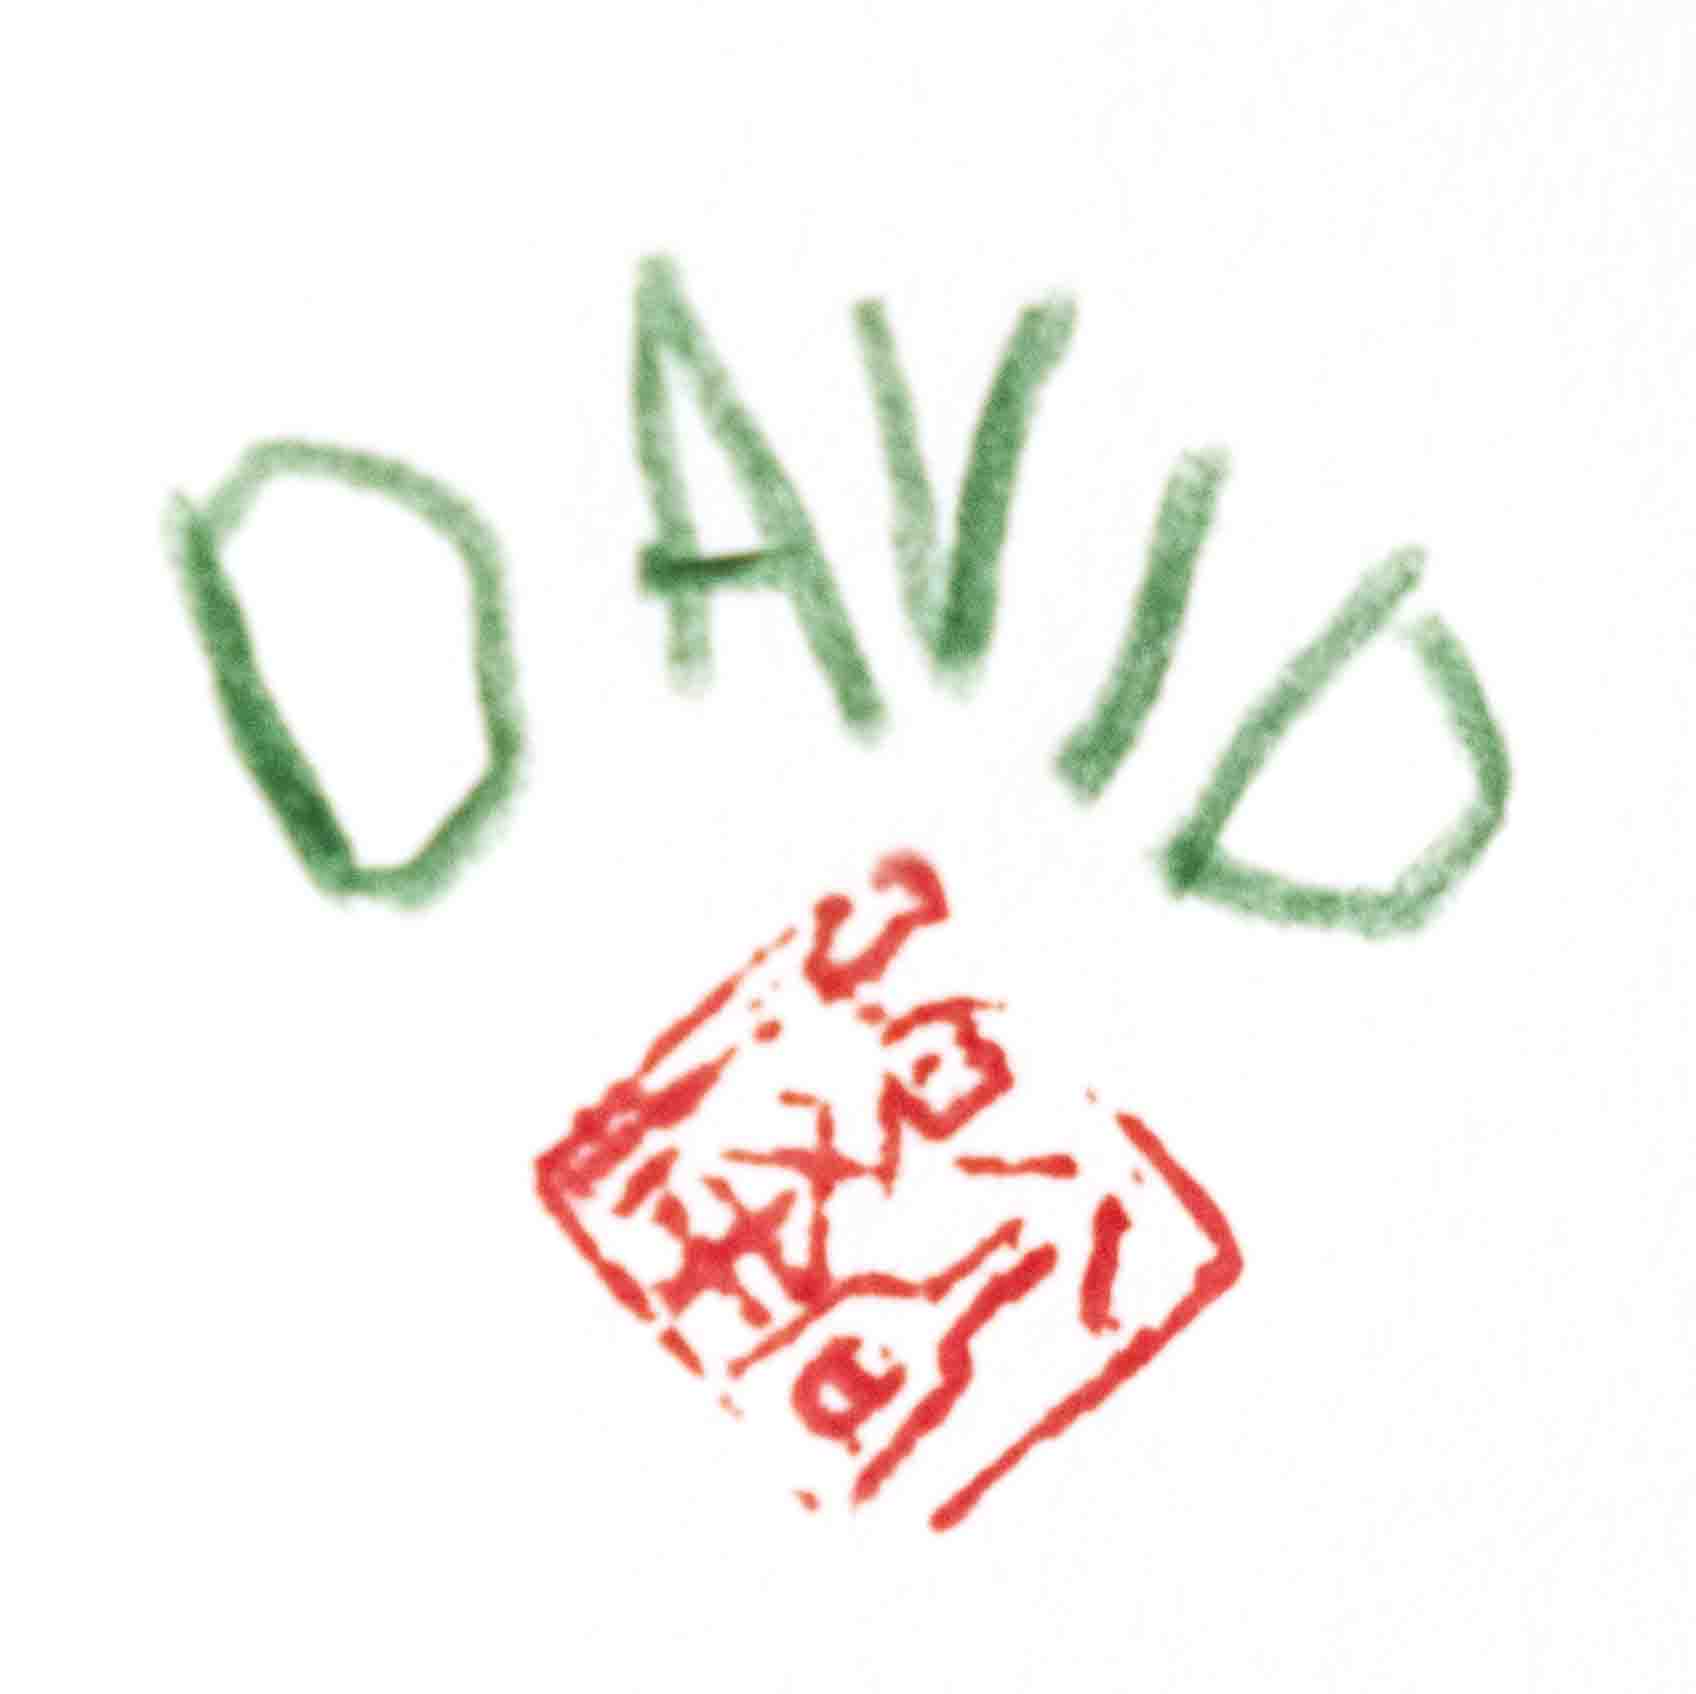 The David Image